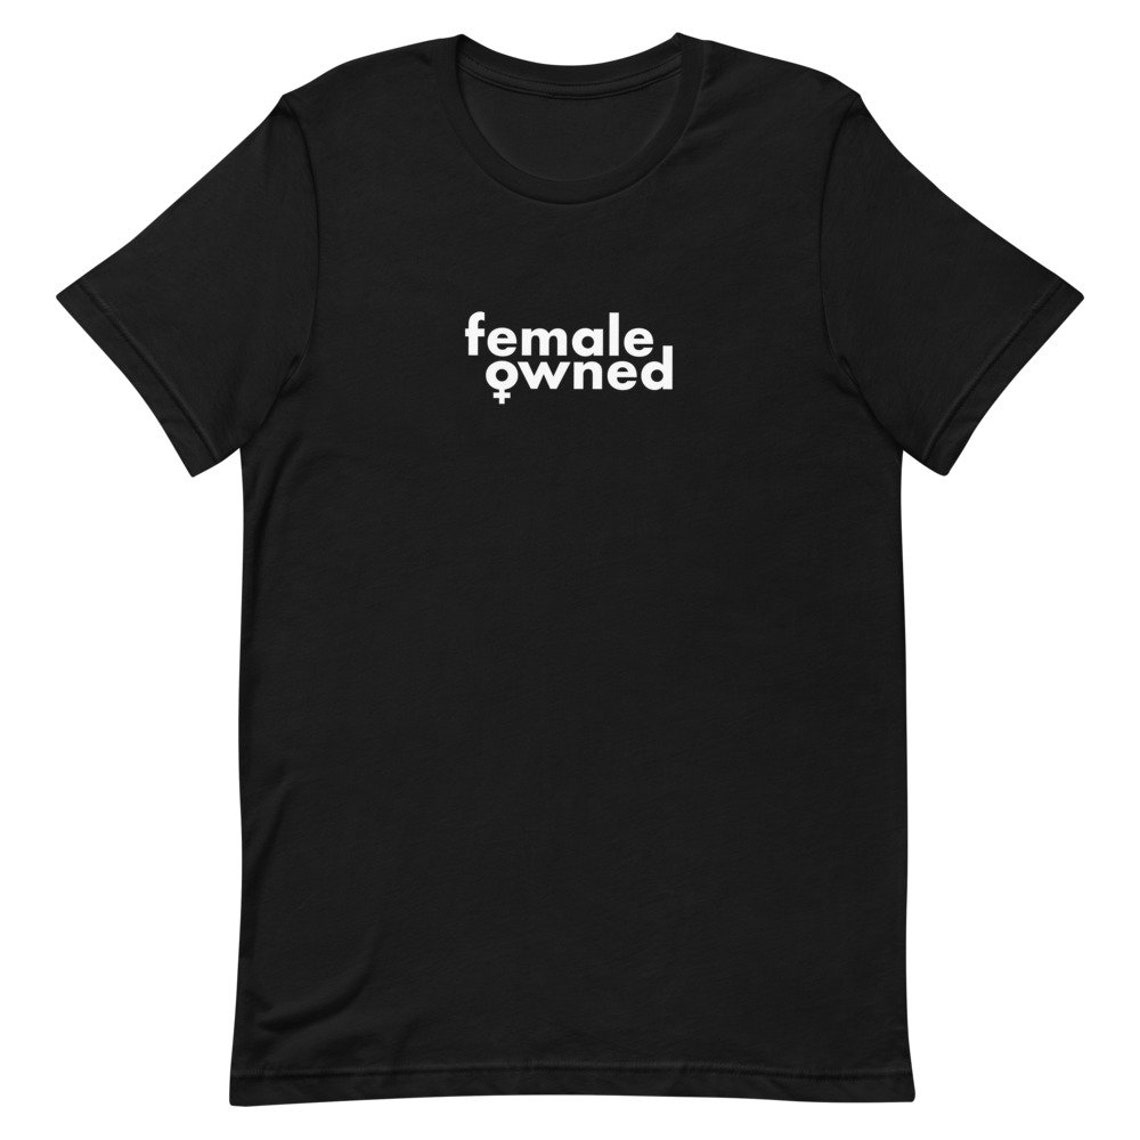 FEMALE OWNED Female Symbol Graphic T-Shirt for Women | Etsy